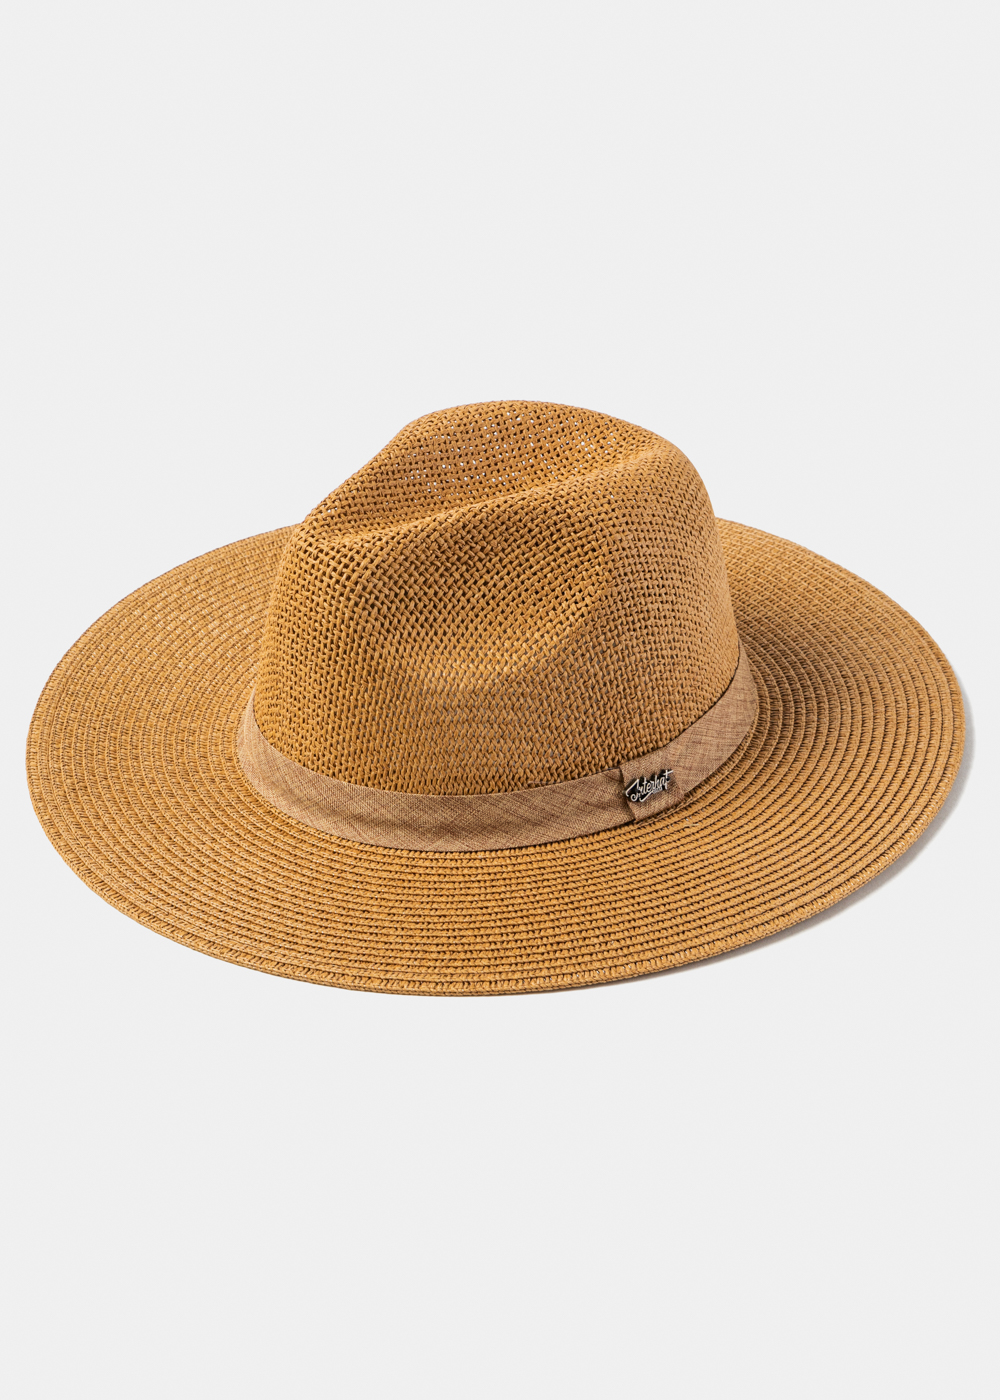 Brown Panama Style Hat w/ Hatband in Tone